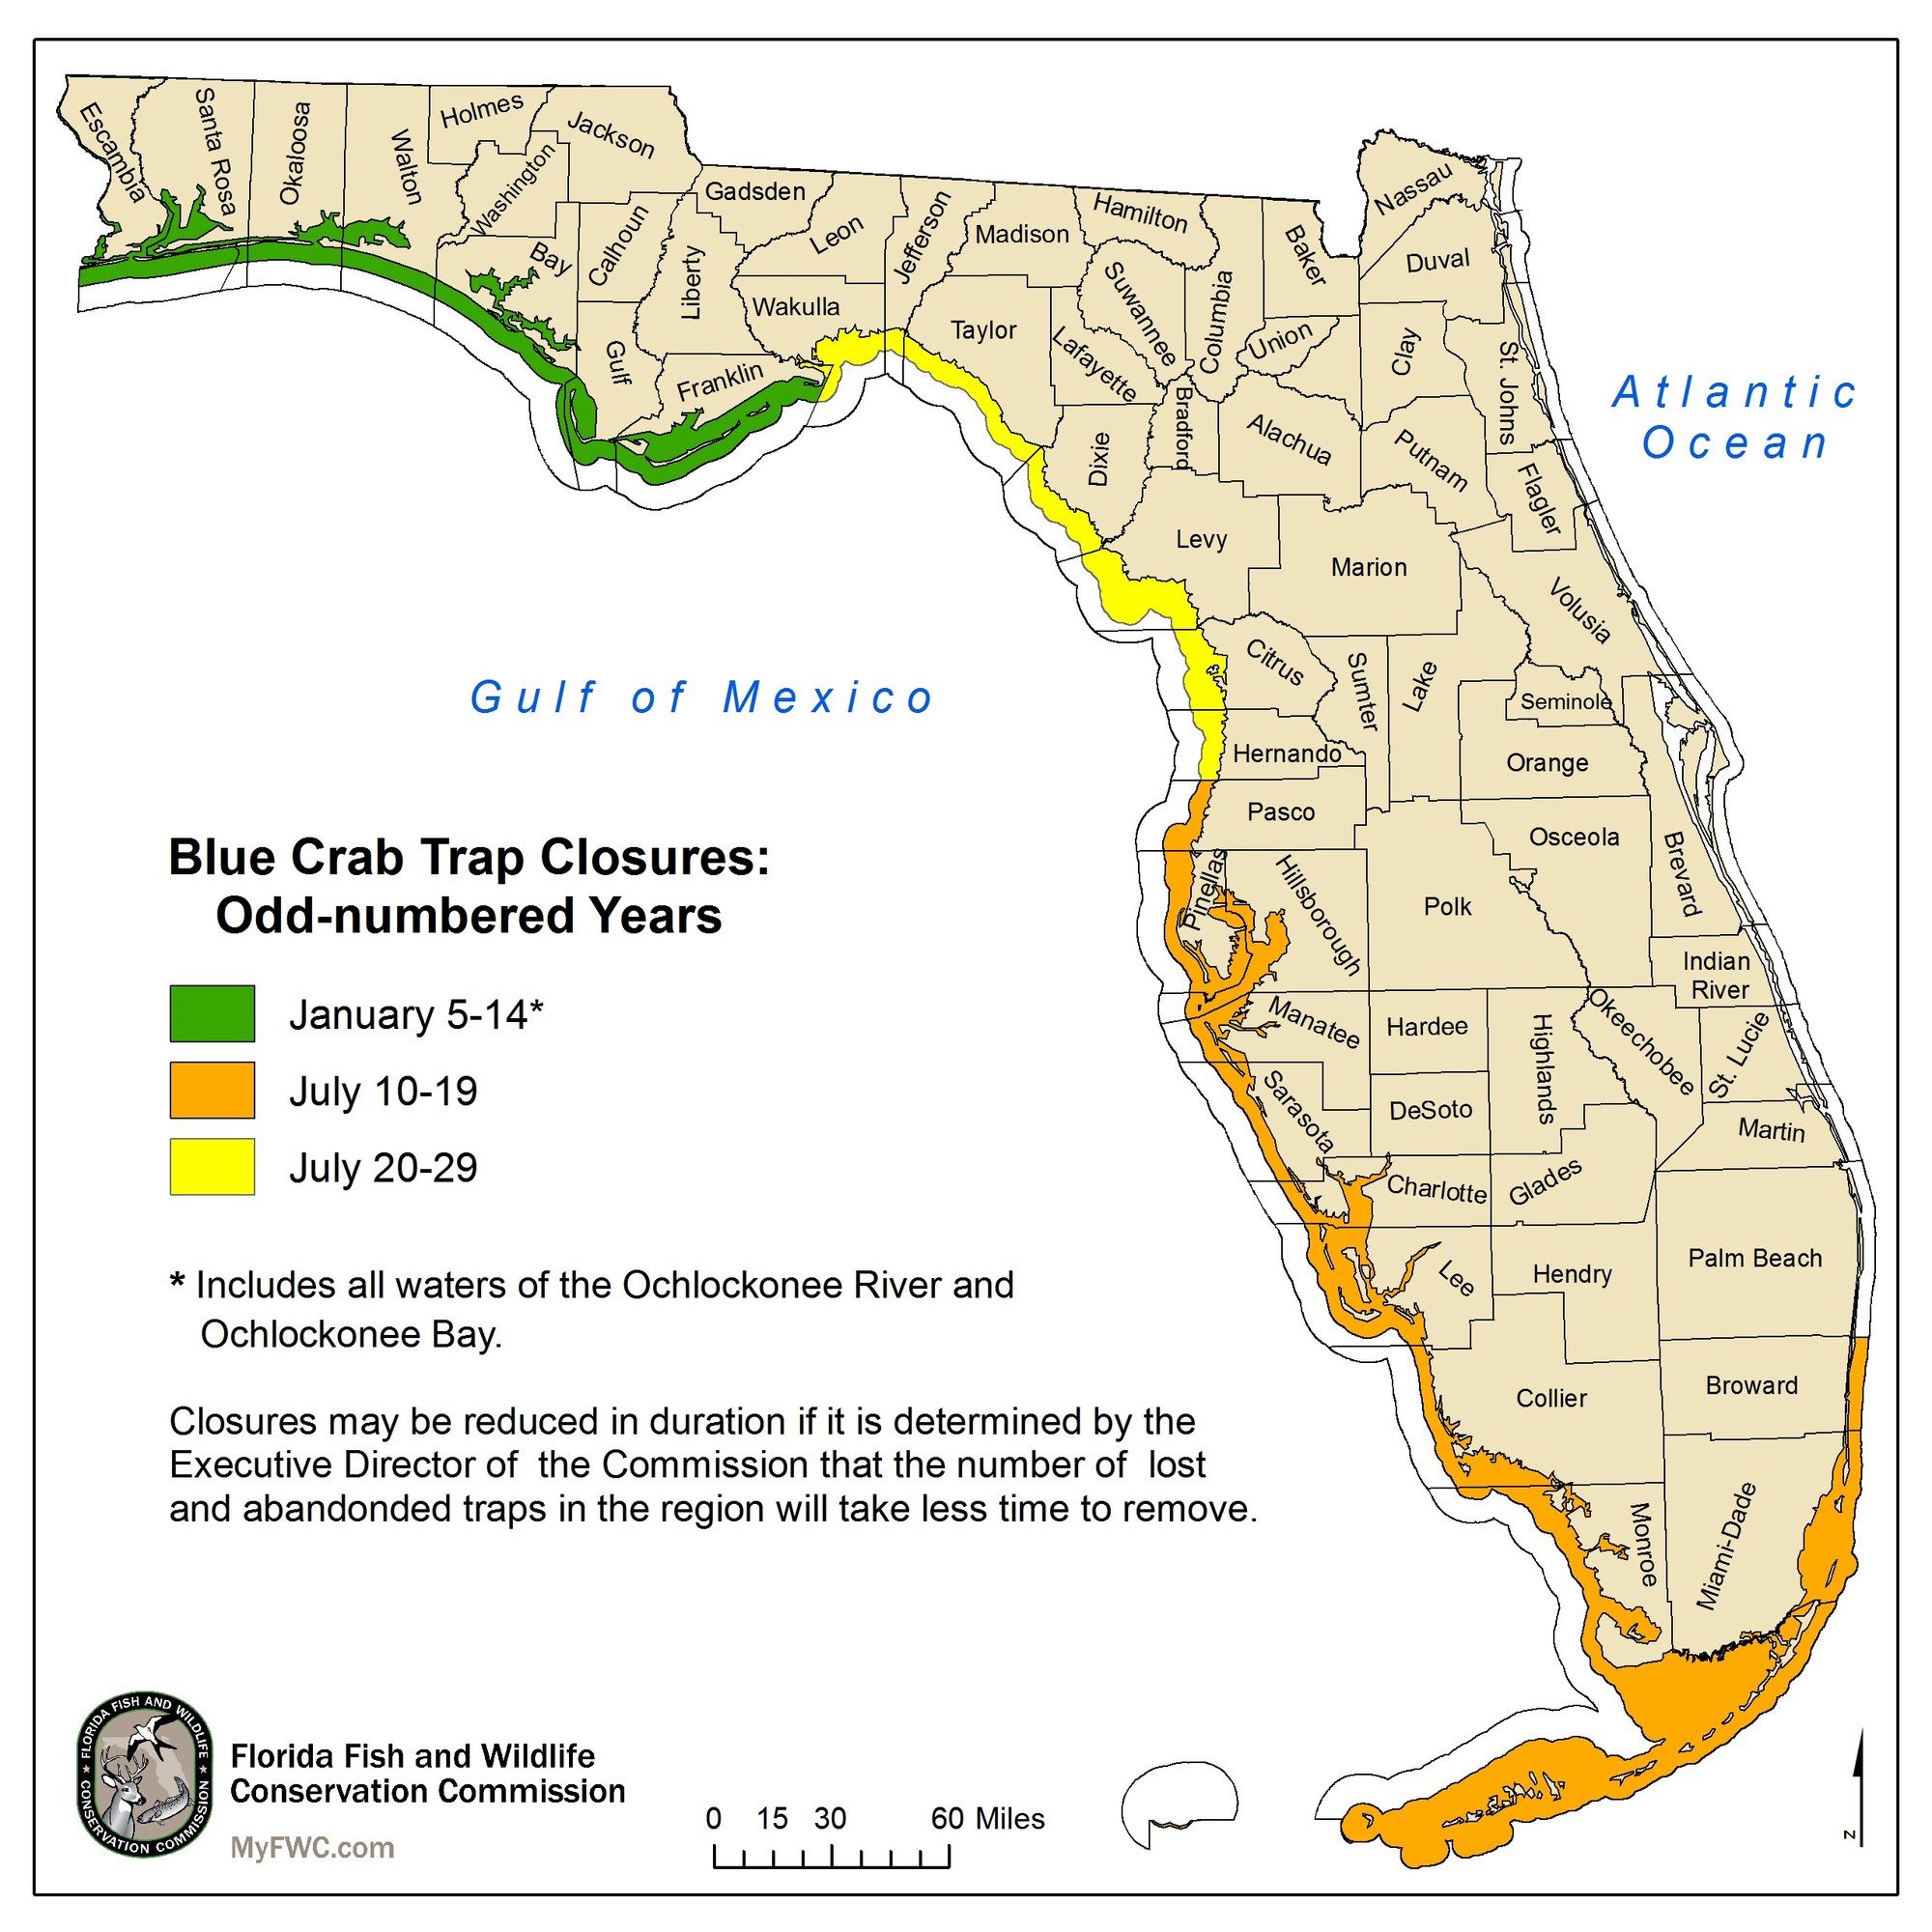 Southwest Florida Blue Crab Trap Closure Starts July 10 Followed